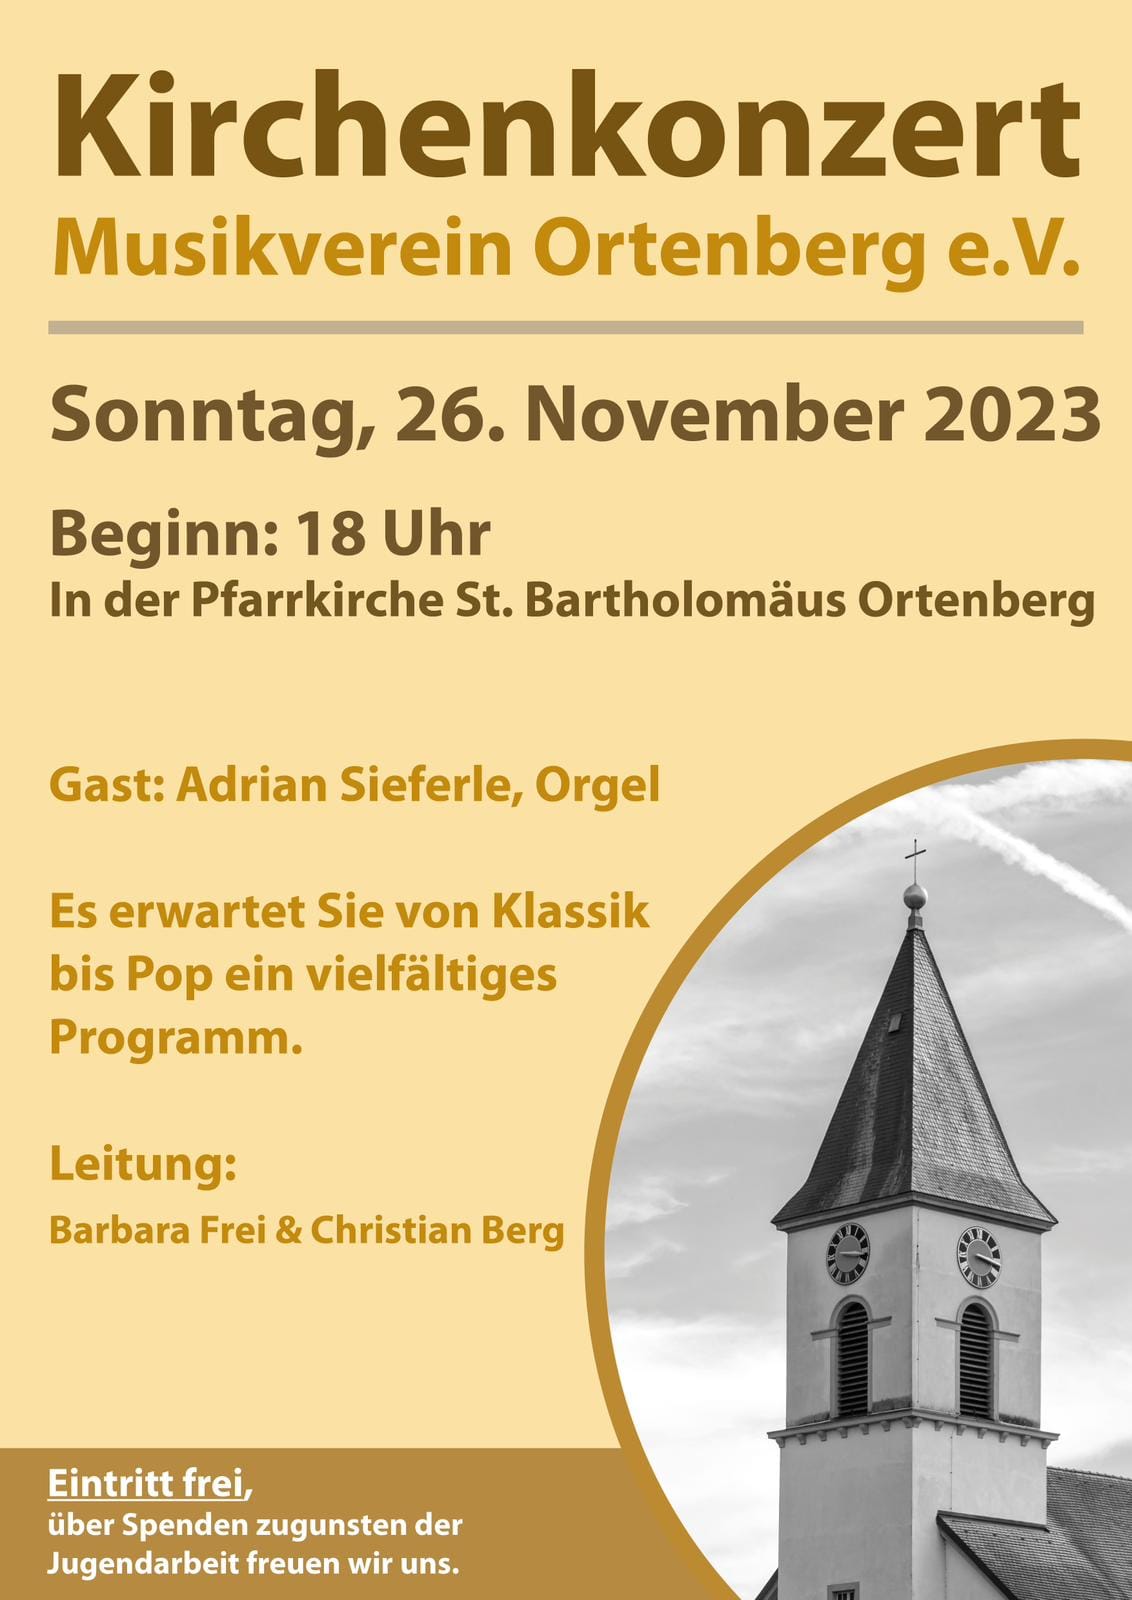 Kirchenkonzert Musikverein Ortenberg e.V. am 26.11.2023